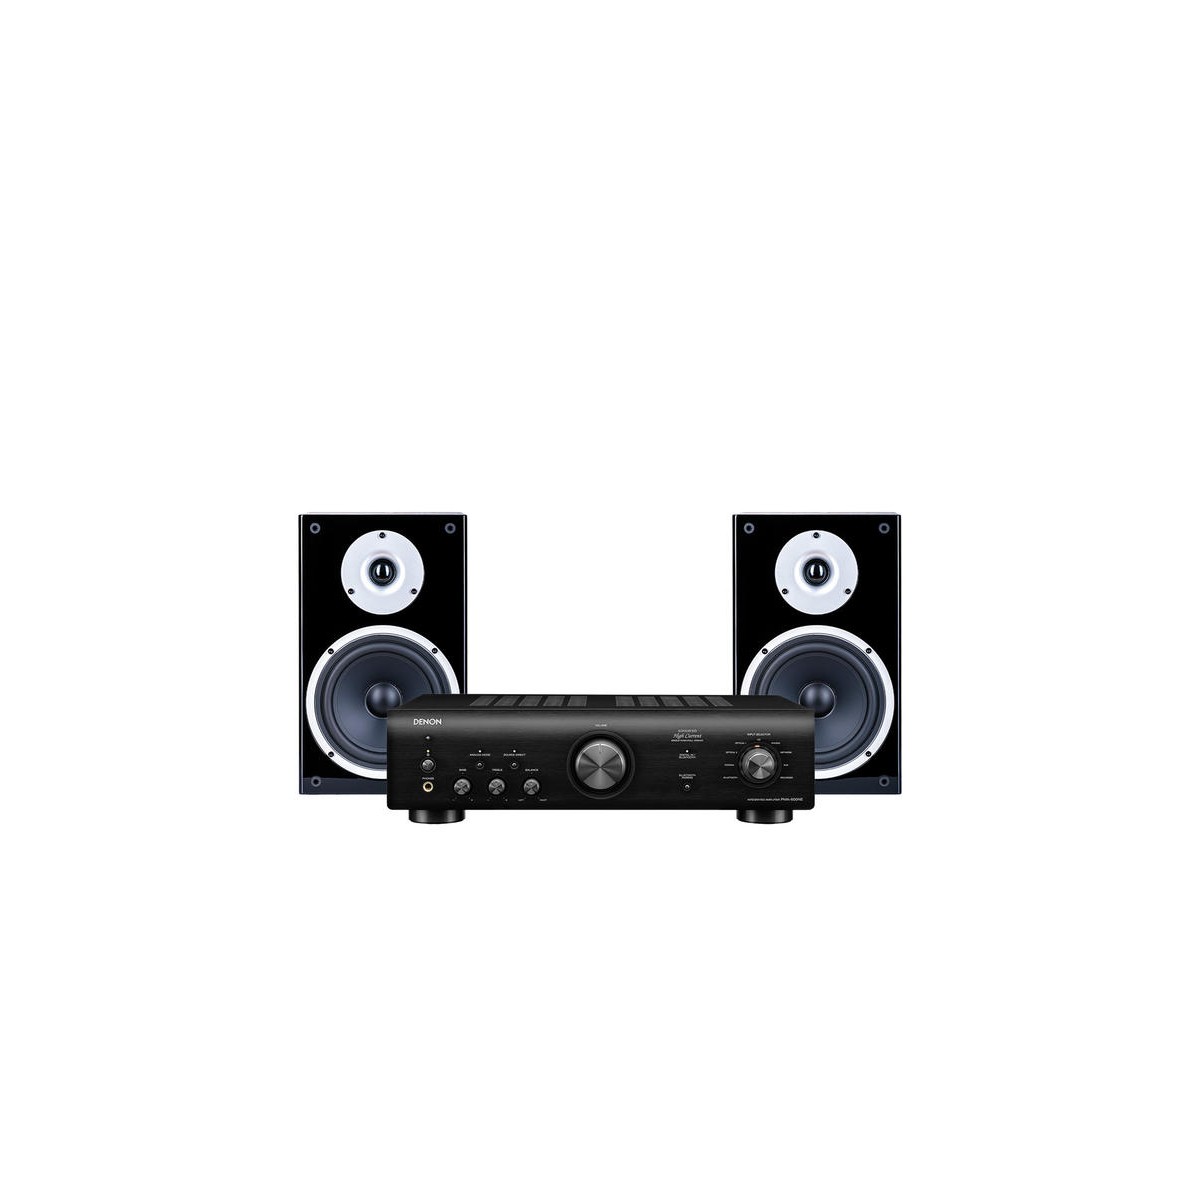 Zestaw stereo: PMA-600NE + Raptor 3